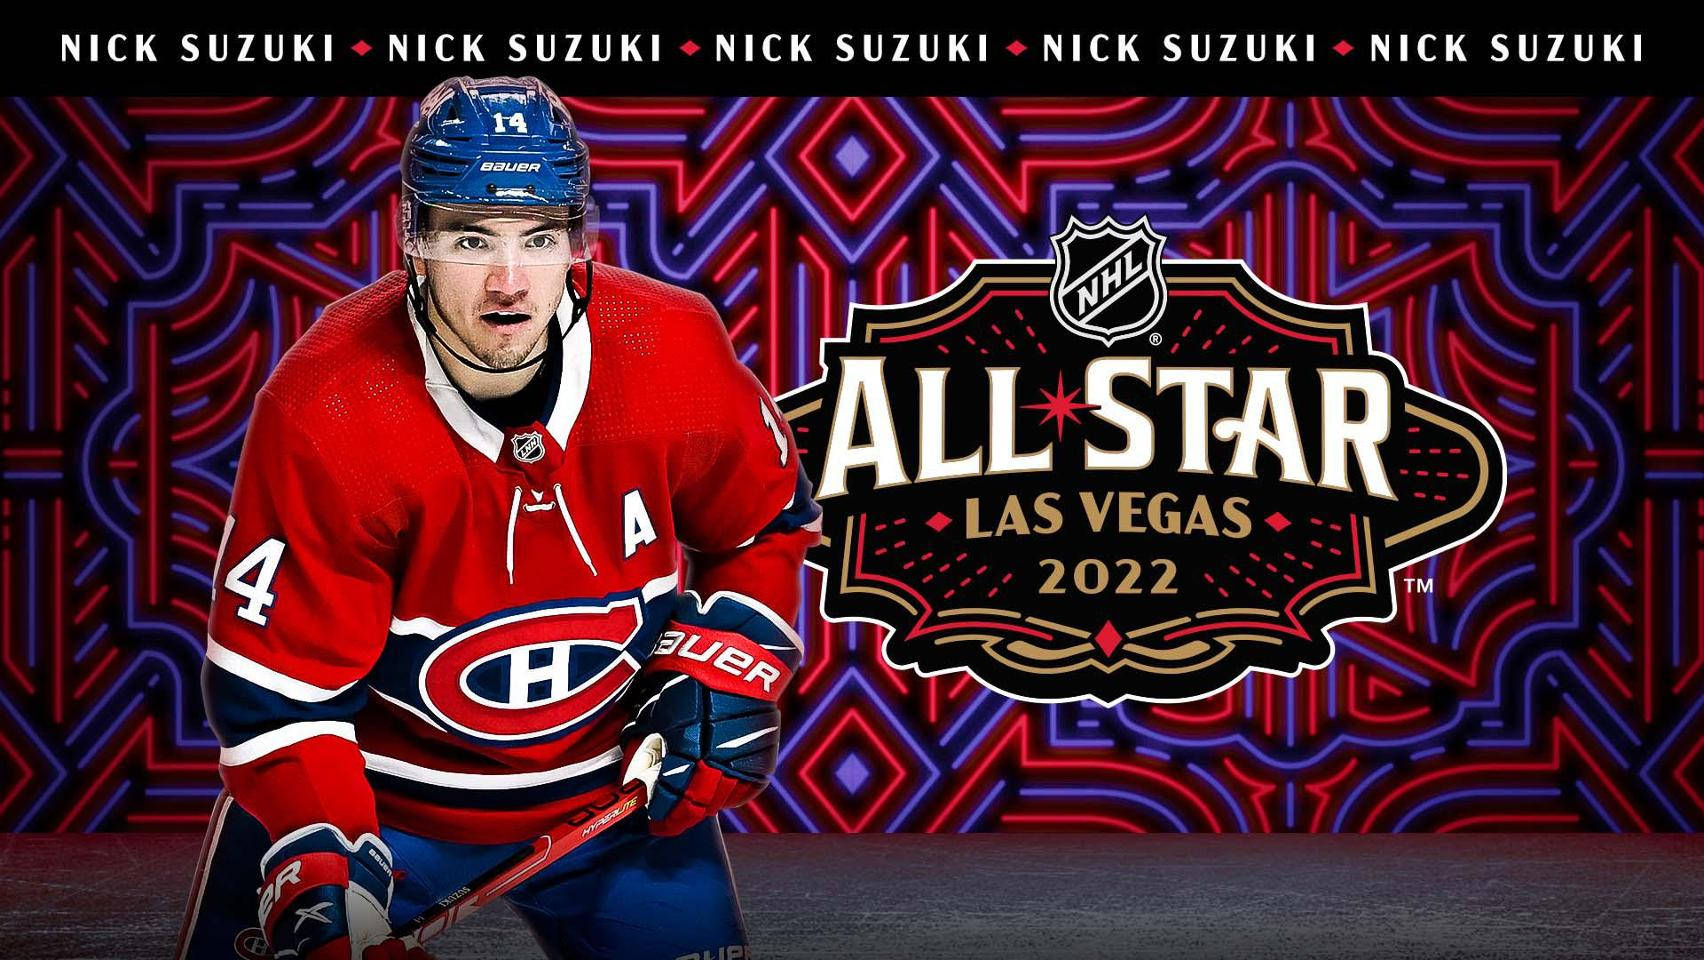 Nhl Montreal Canadiens Nick Suzuki All Star Poster Wallpaper